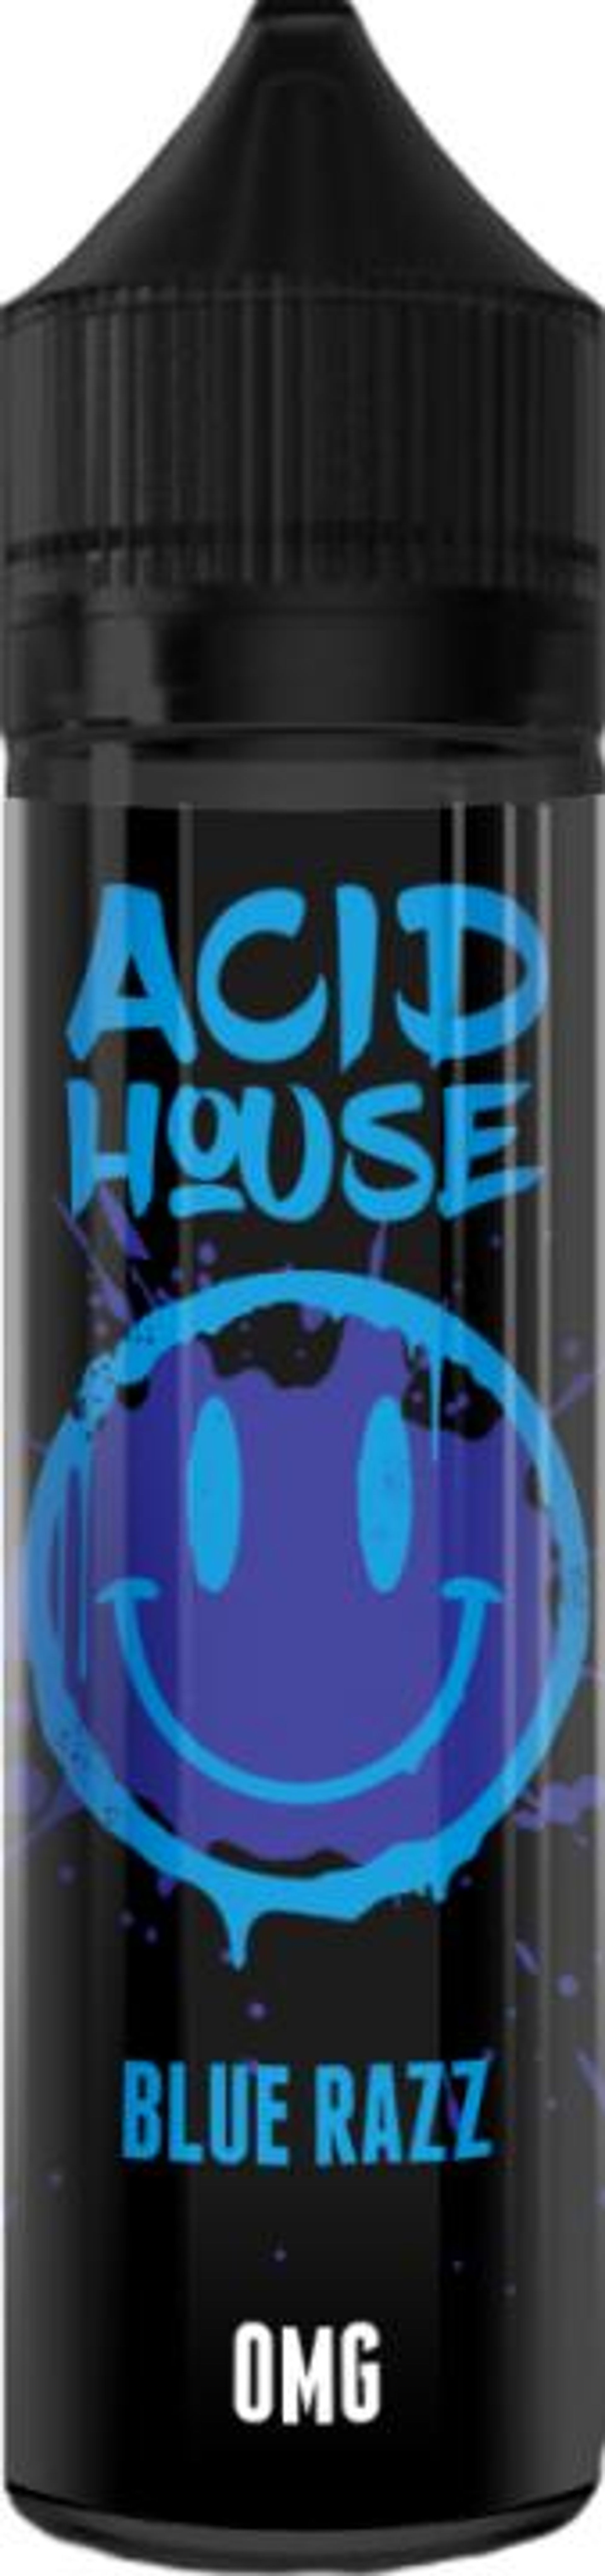 Image of Blue Razz by Acid House